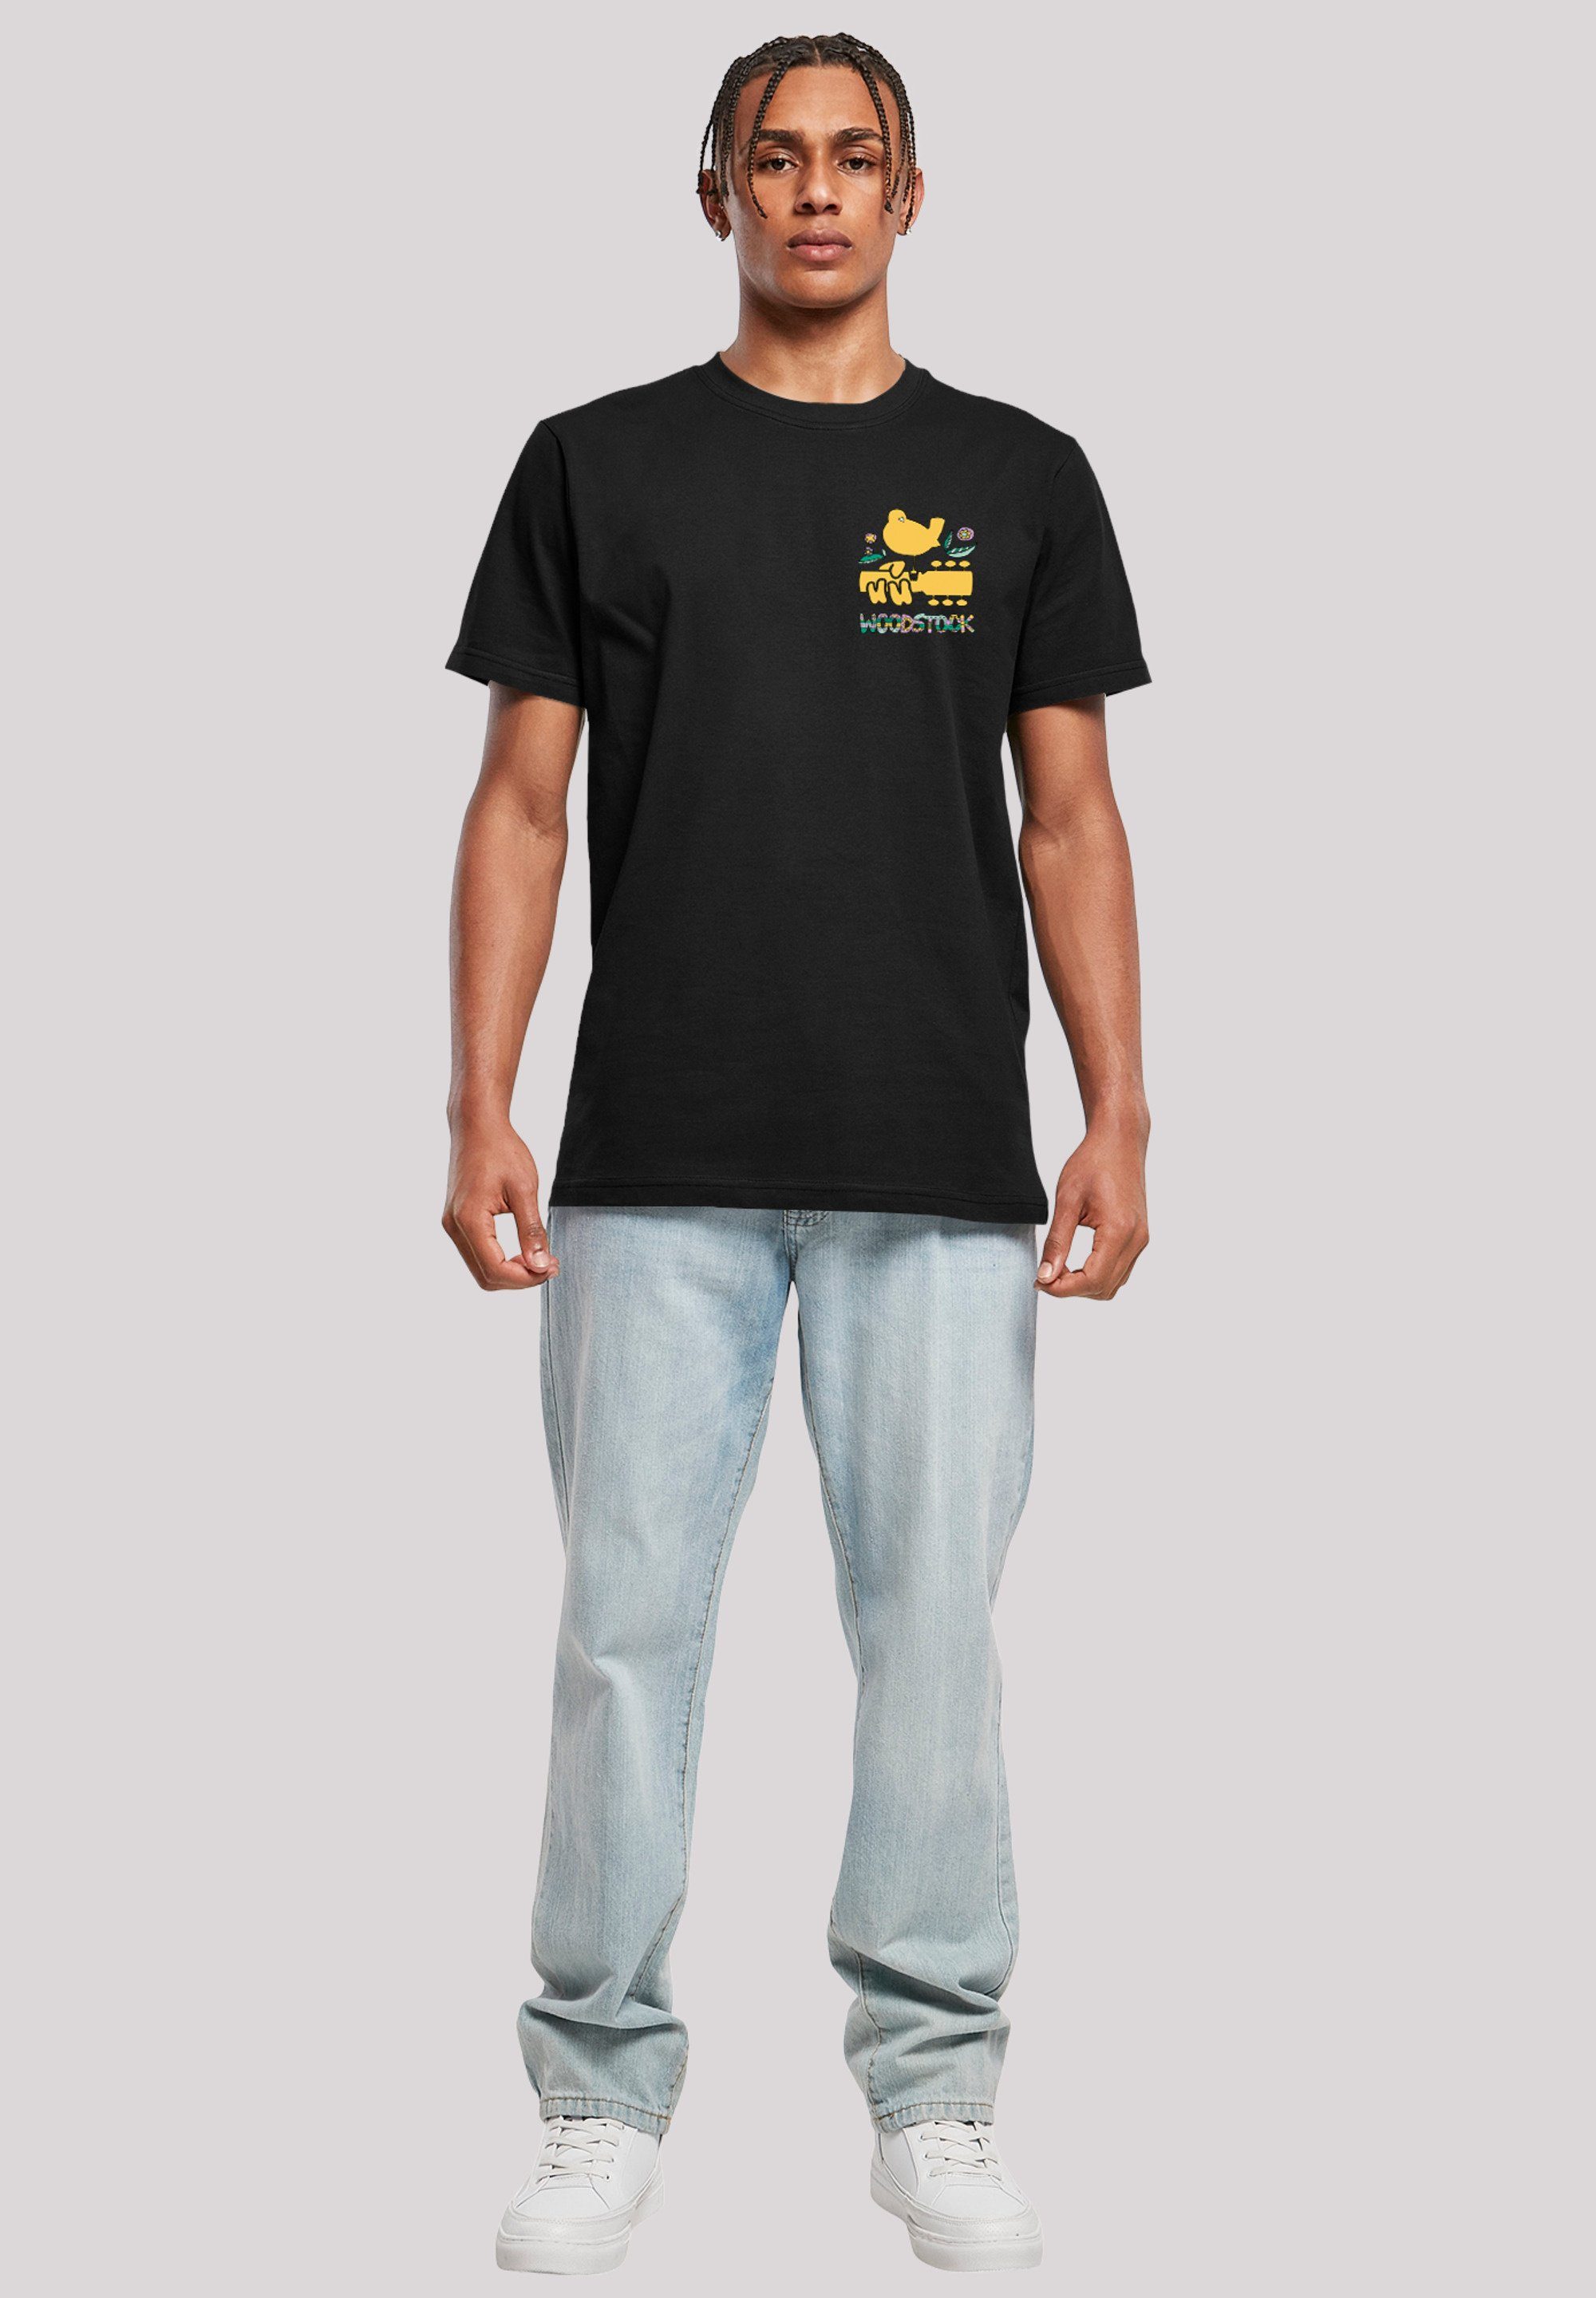 F4NT4STIC T-Shirt Woodstock Brust Logo Print schwarz